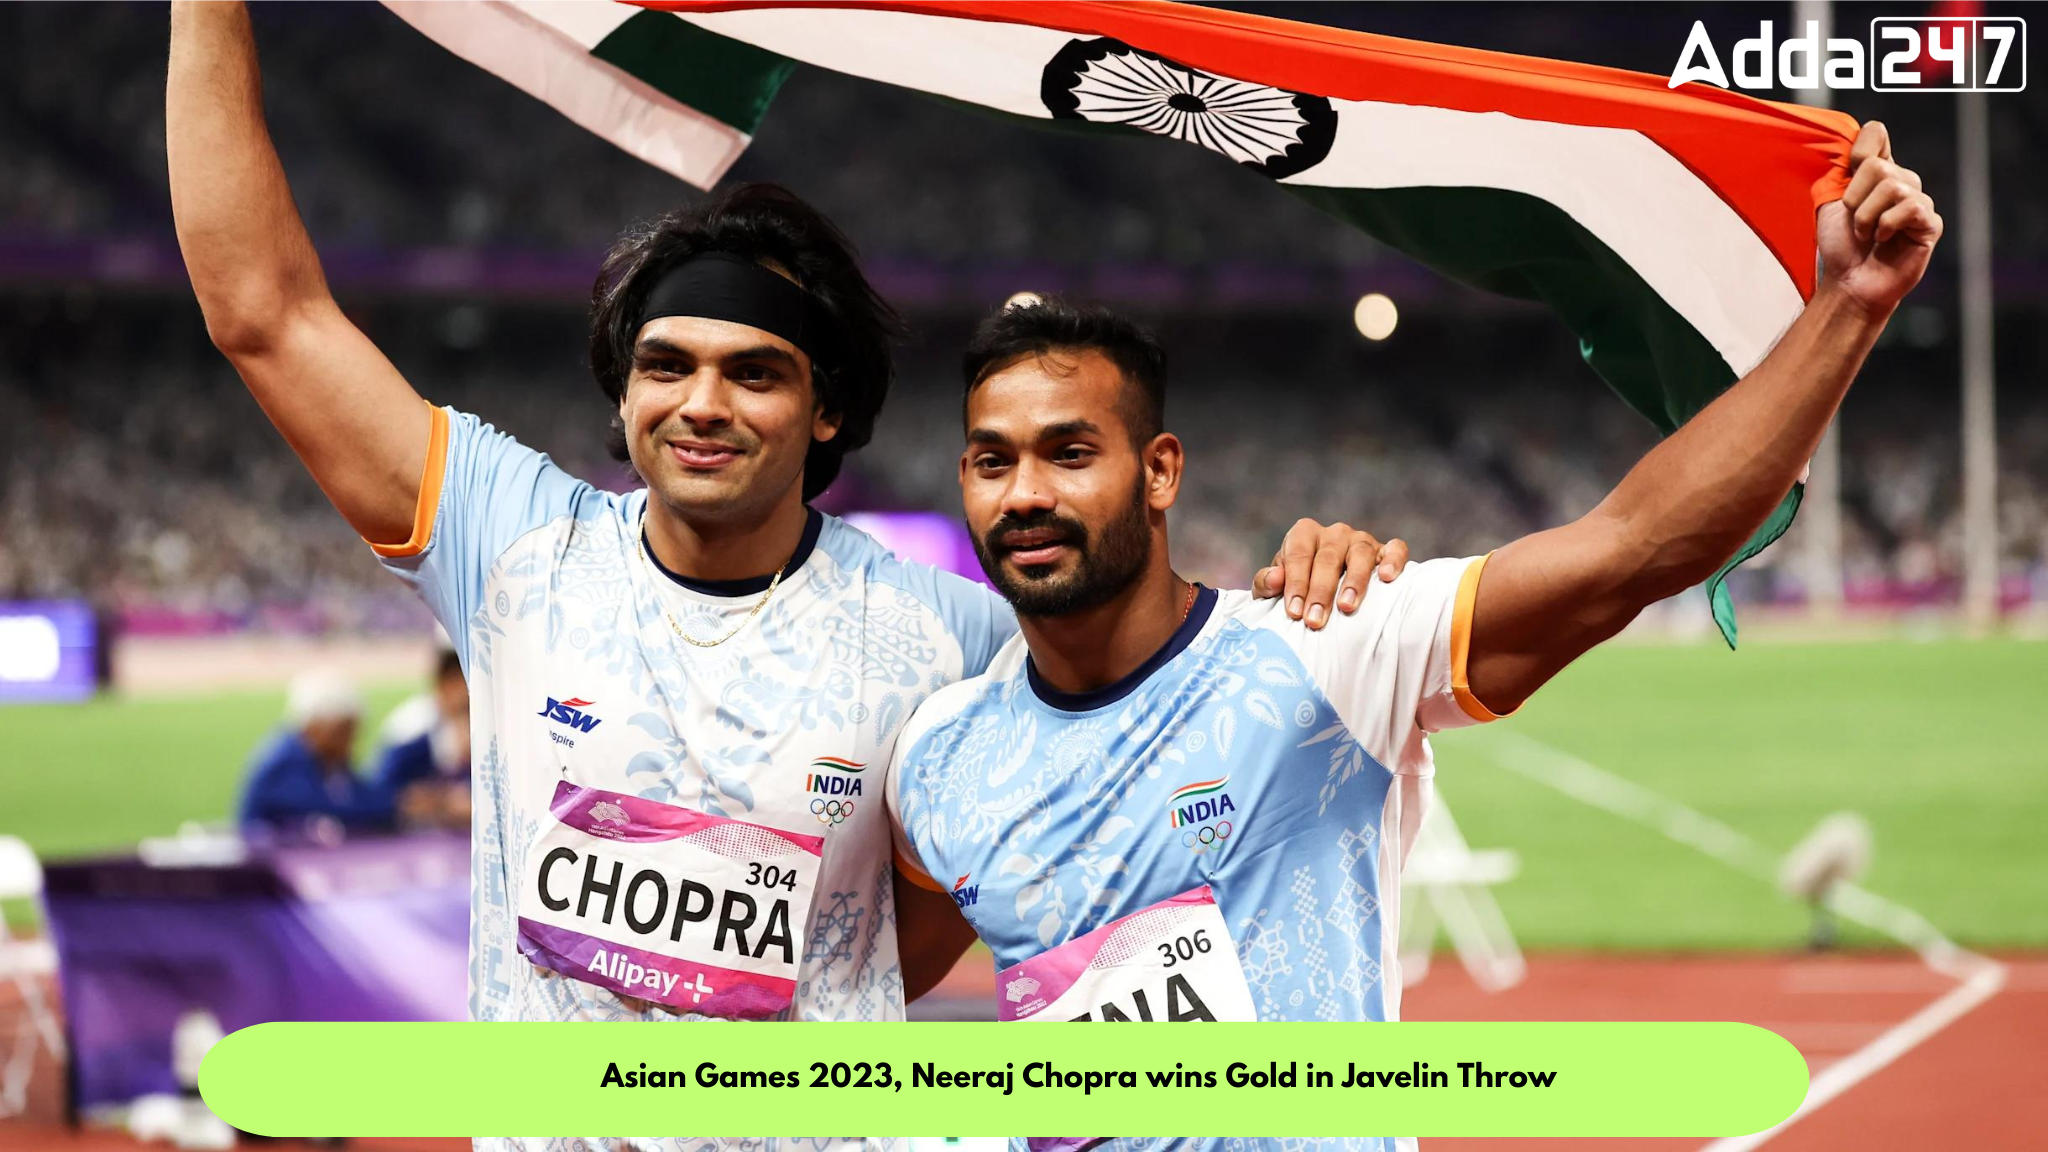 Asian Games 2023, Neeraj Chopra wins Gold in Javelin Throw